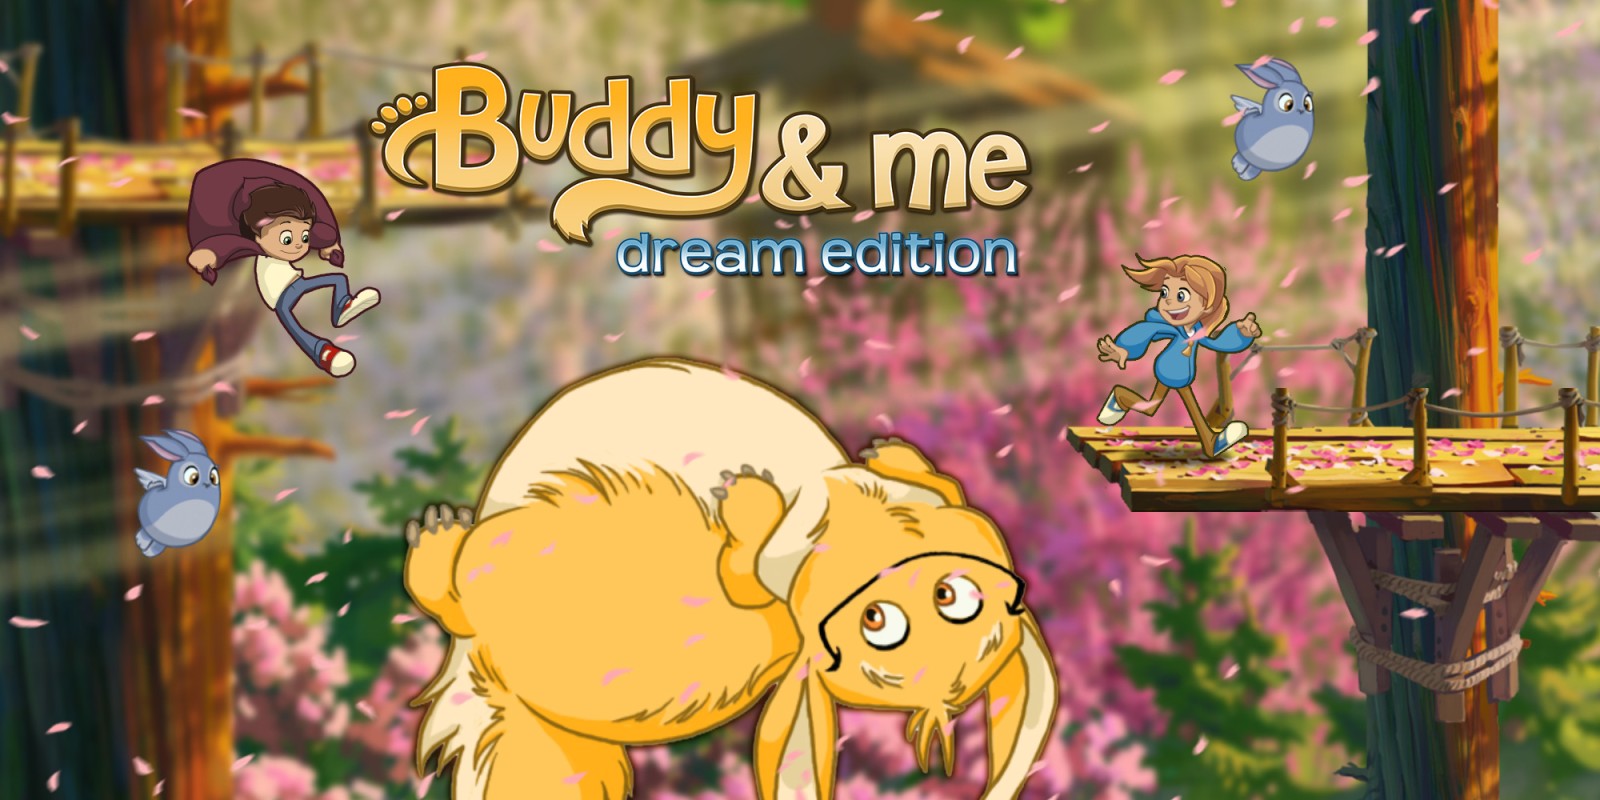 Buddy & Me: Dream Edition